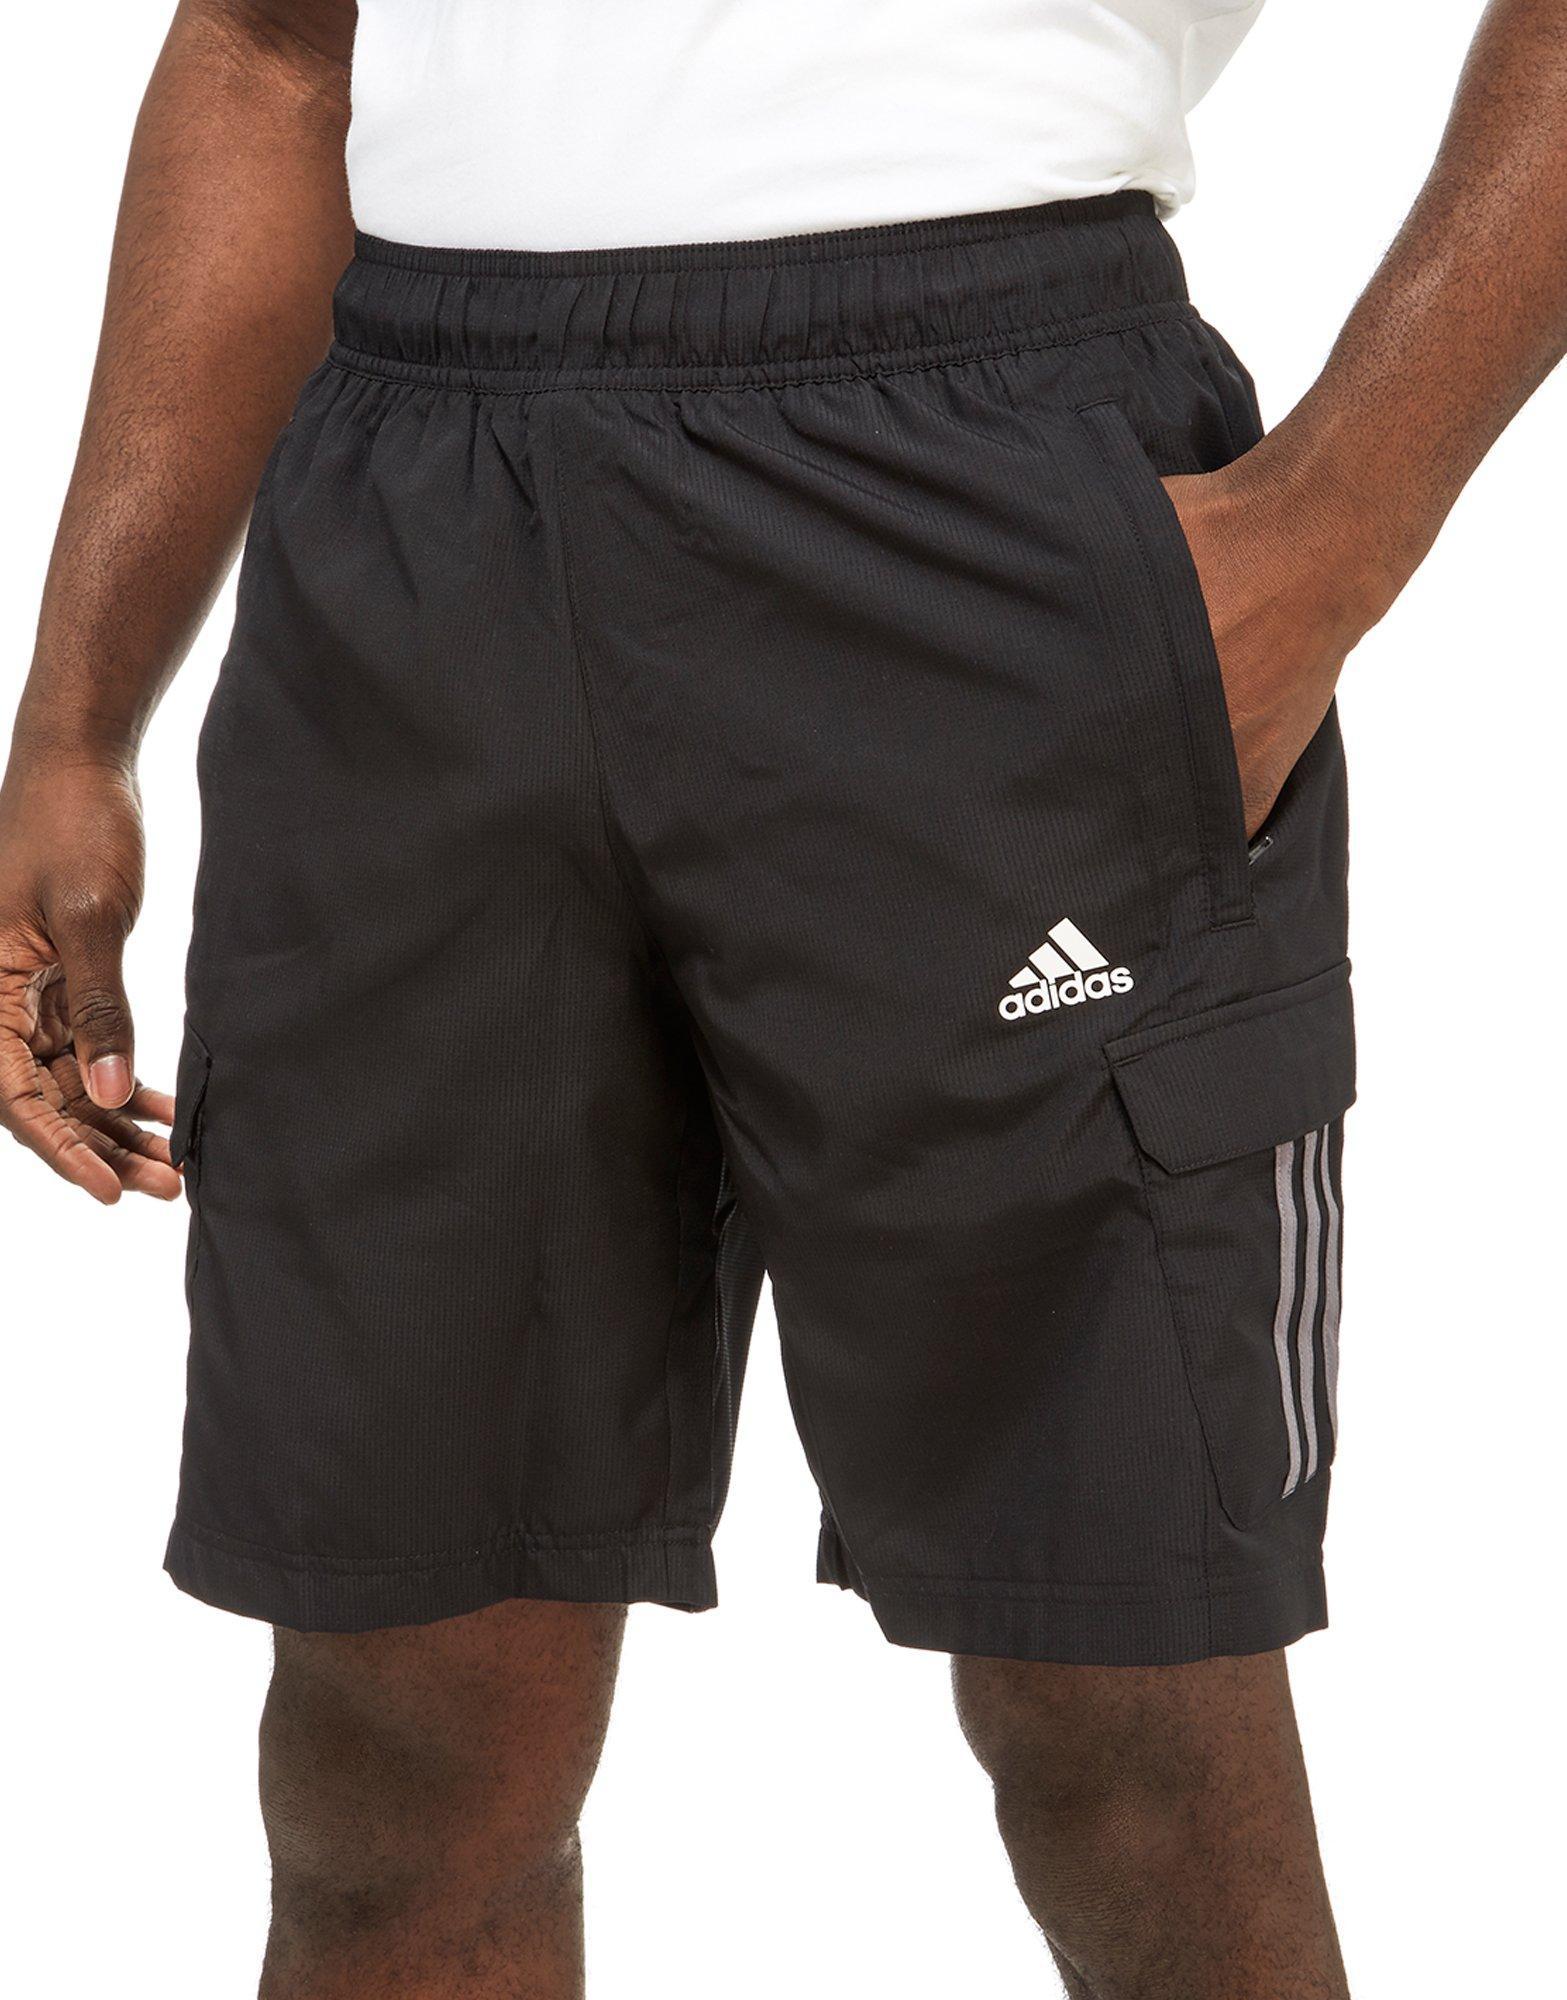 Lyst - Adidas Cargo Shorts in Black for Men